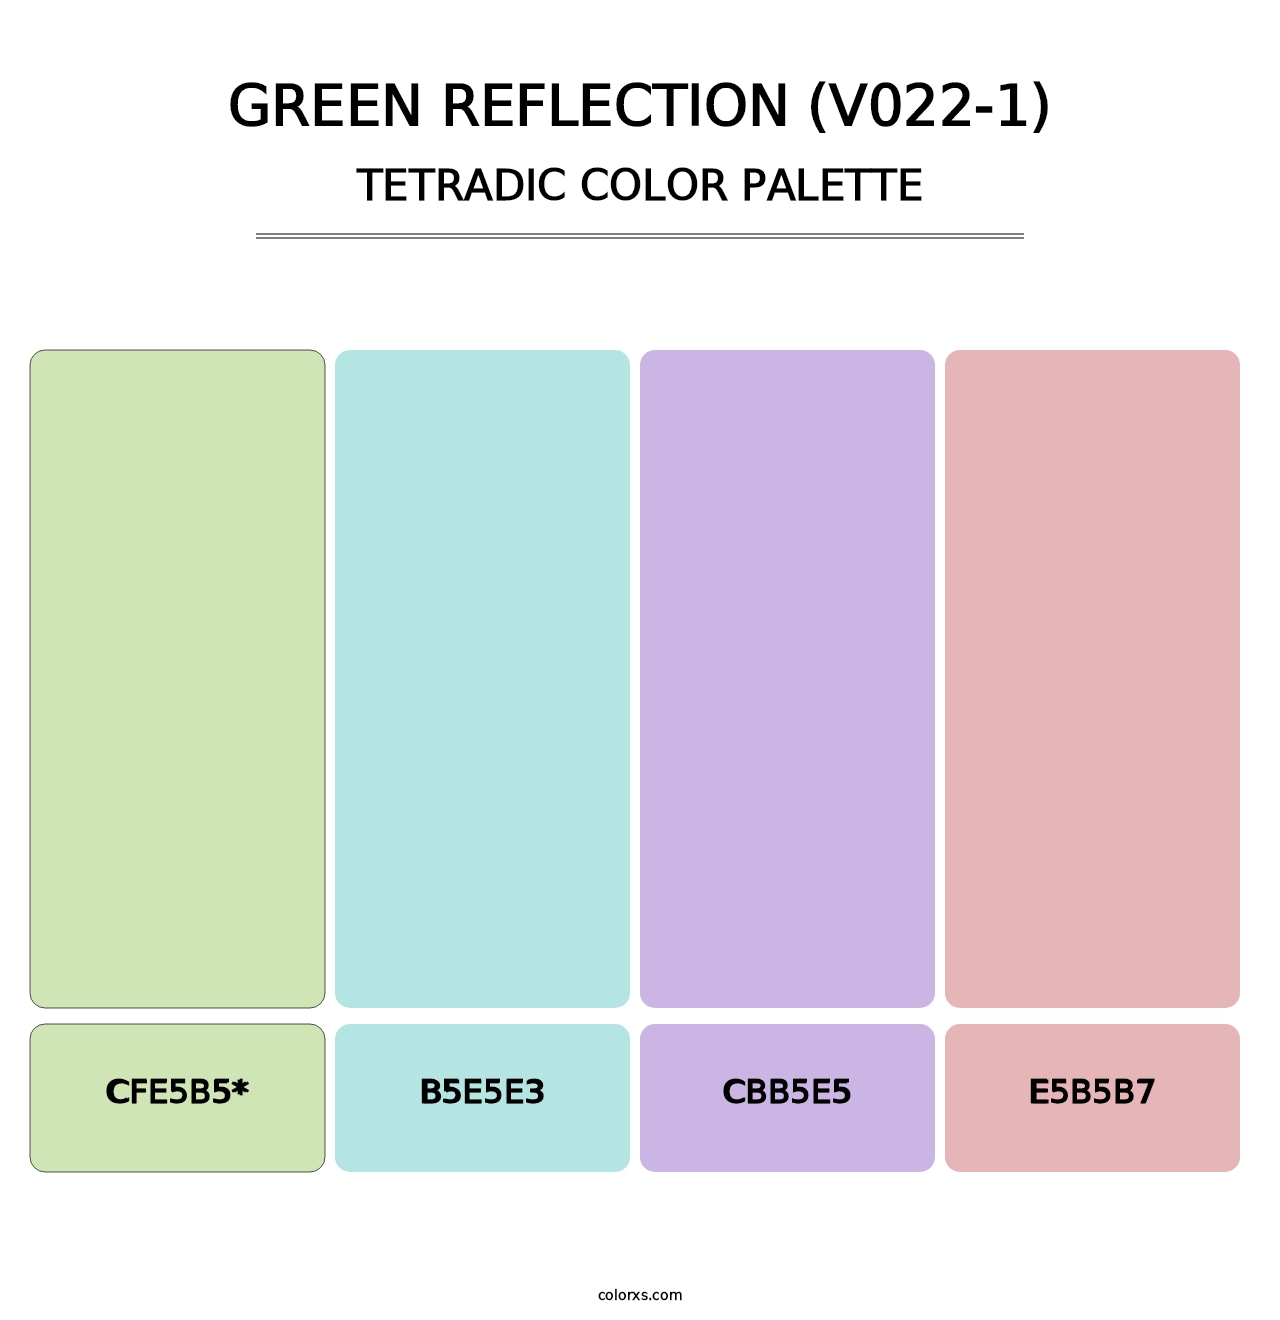 Green Reflection (V022-1) - Tetradic Color Palette